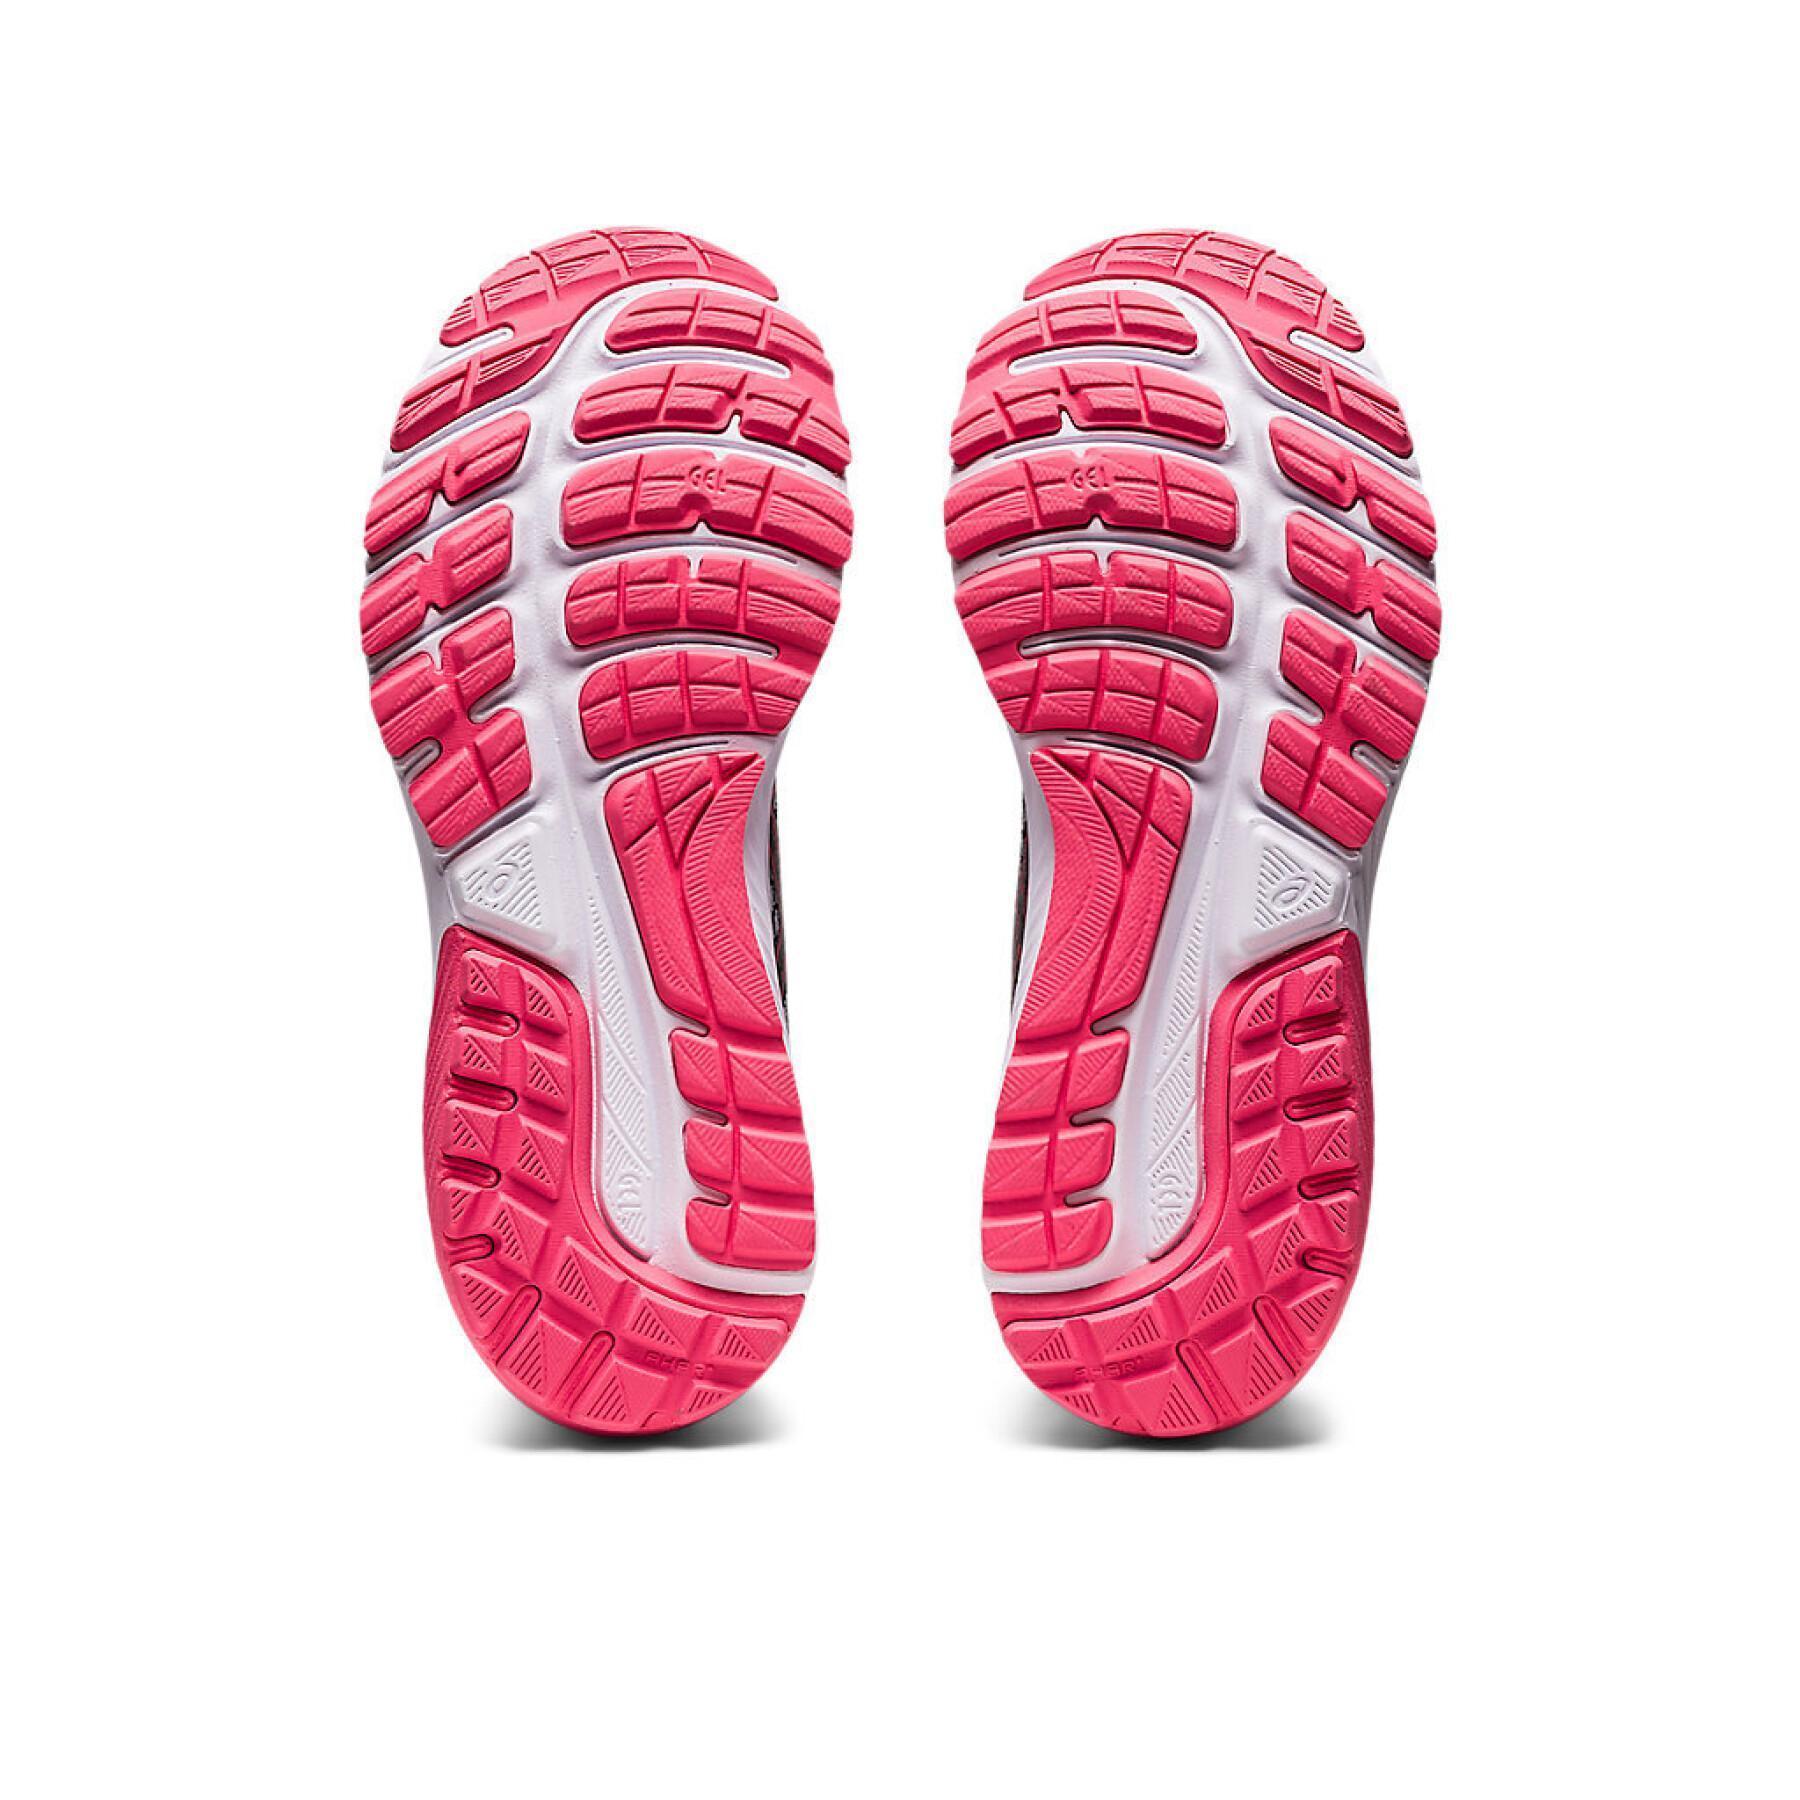 Women's running shoes Asics Gel-Stratus 2